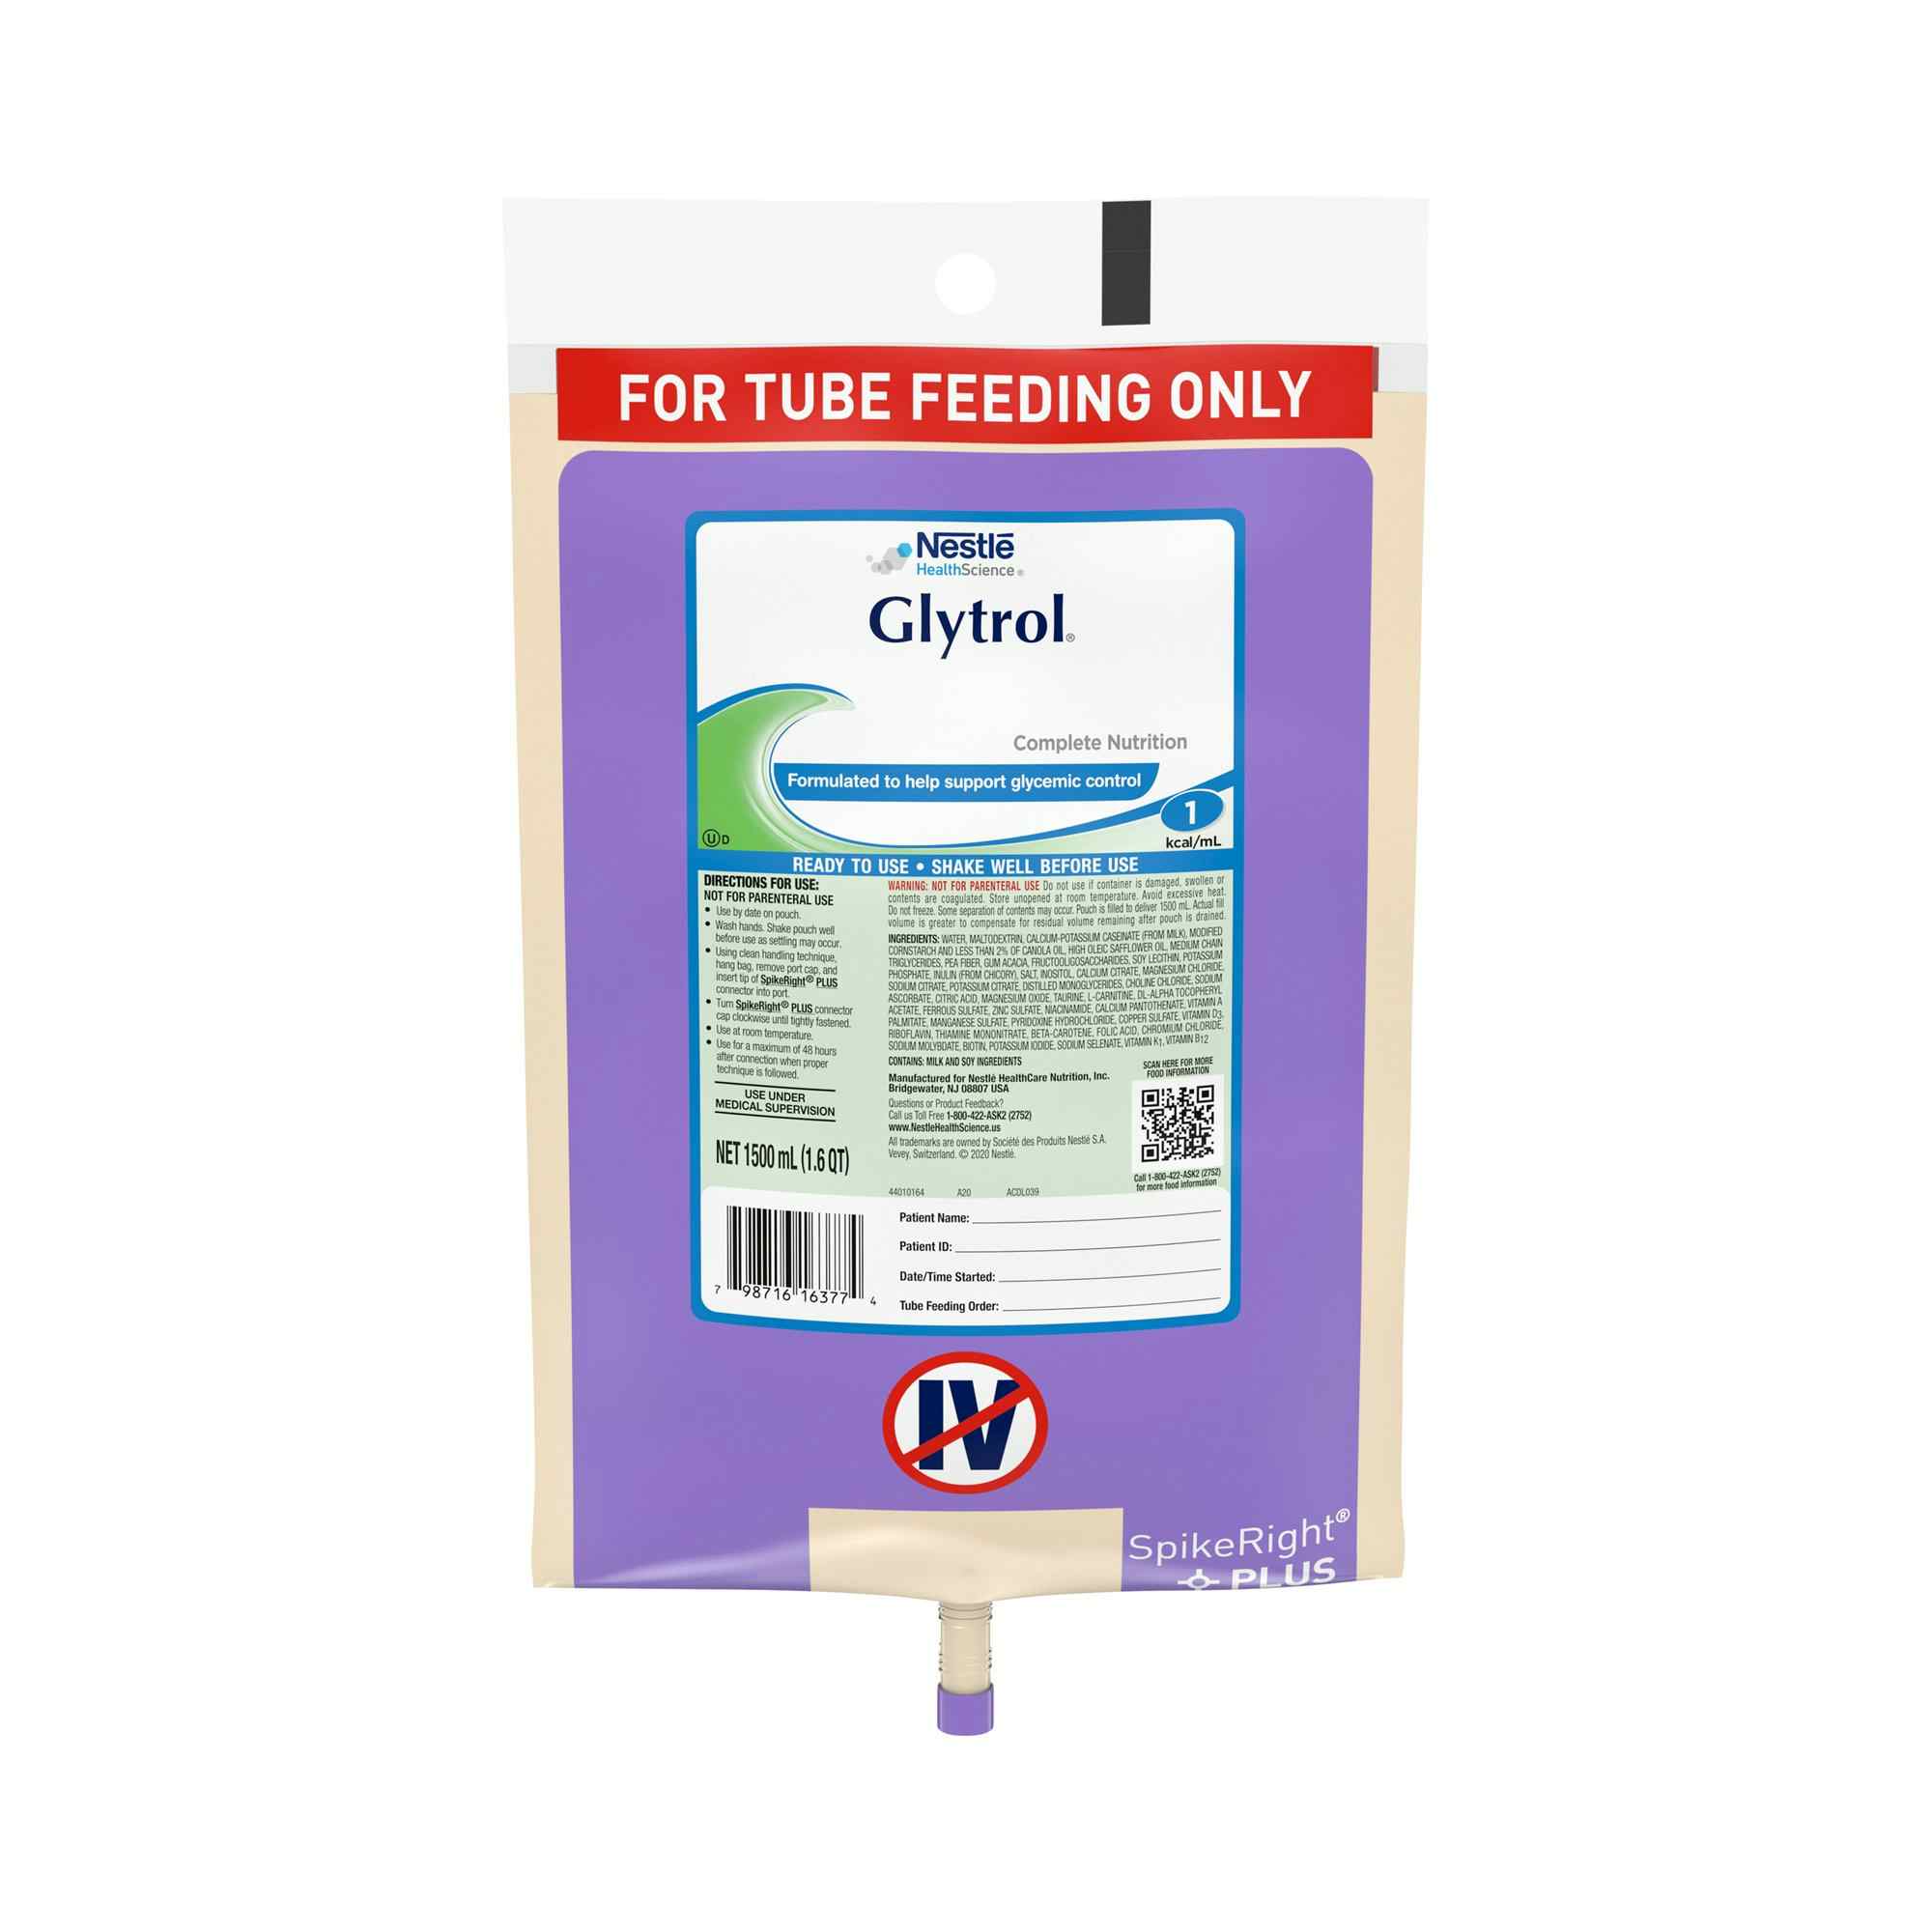 Nestle HealthScience Glytrol Complete Nutrition Tube Feeding Formula, 9871632391, 50.7 oz. - 1 Each